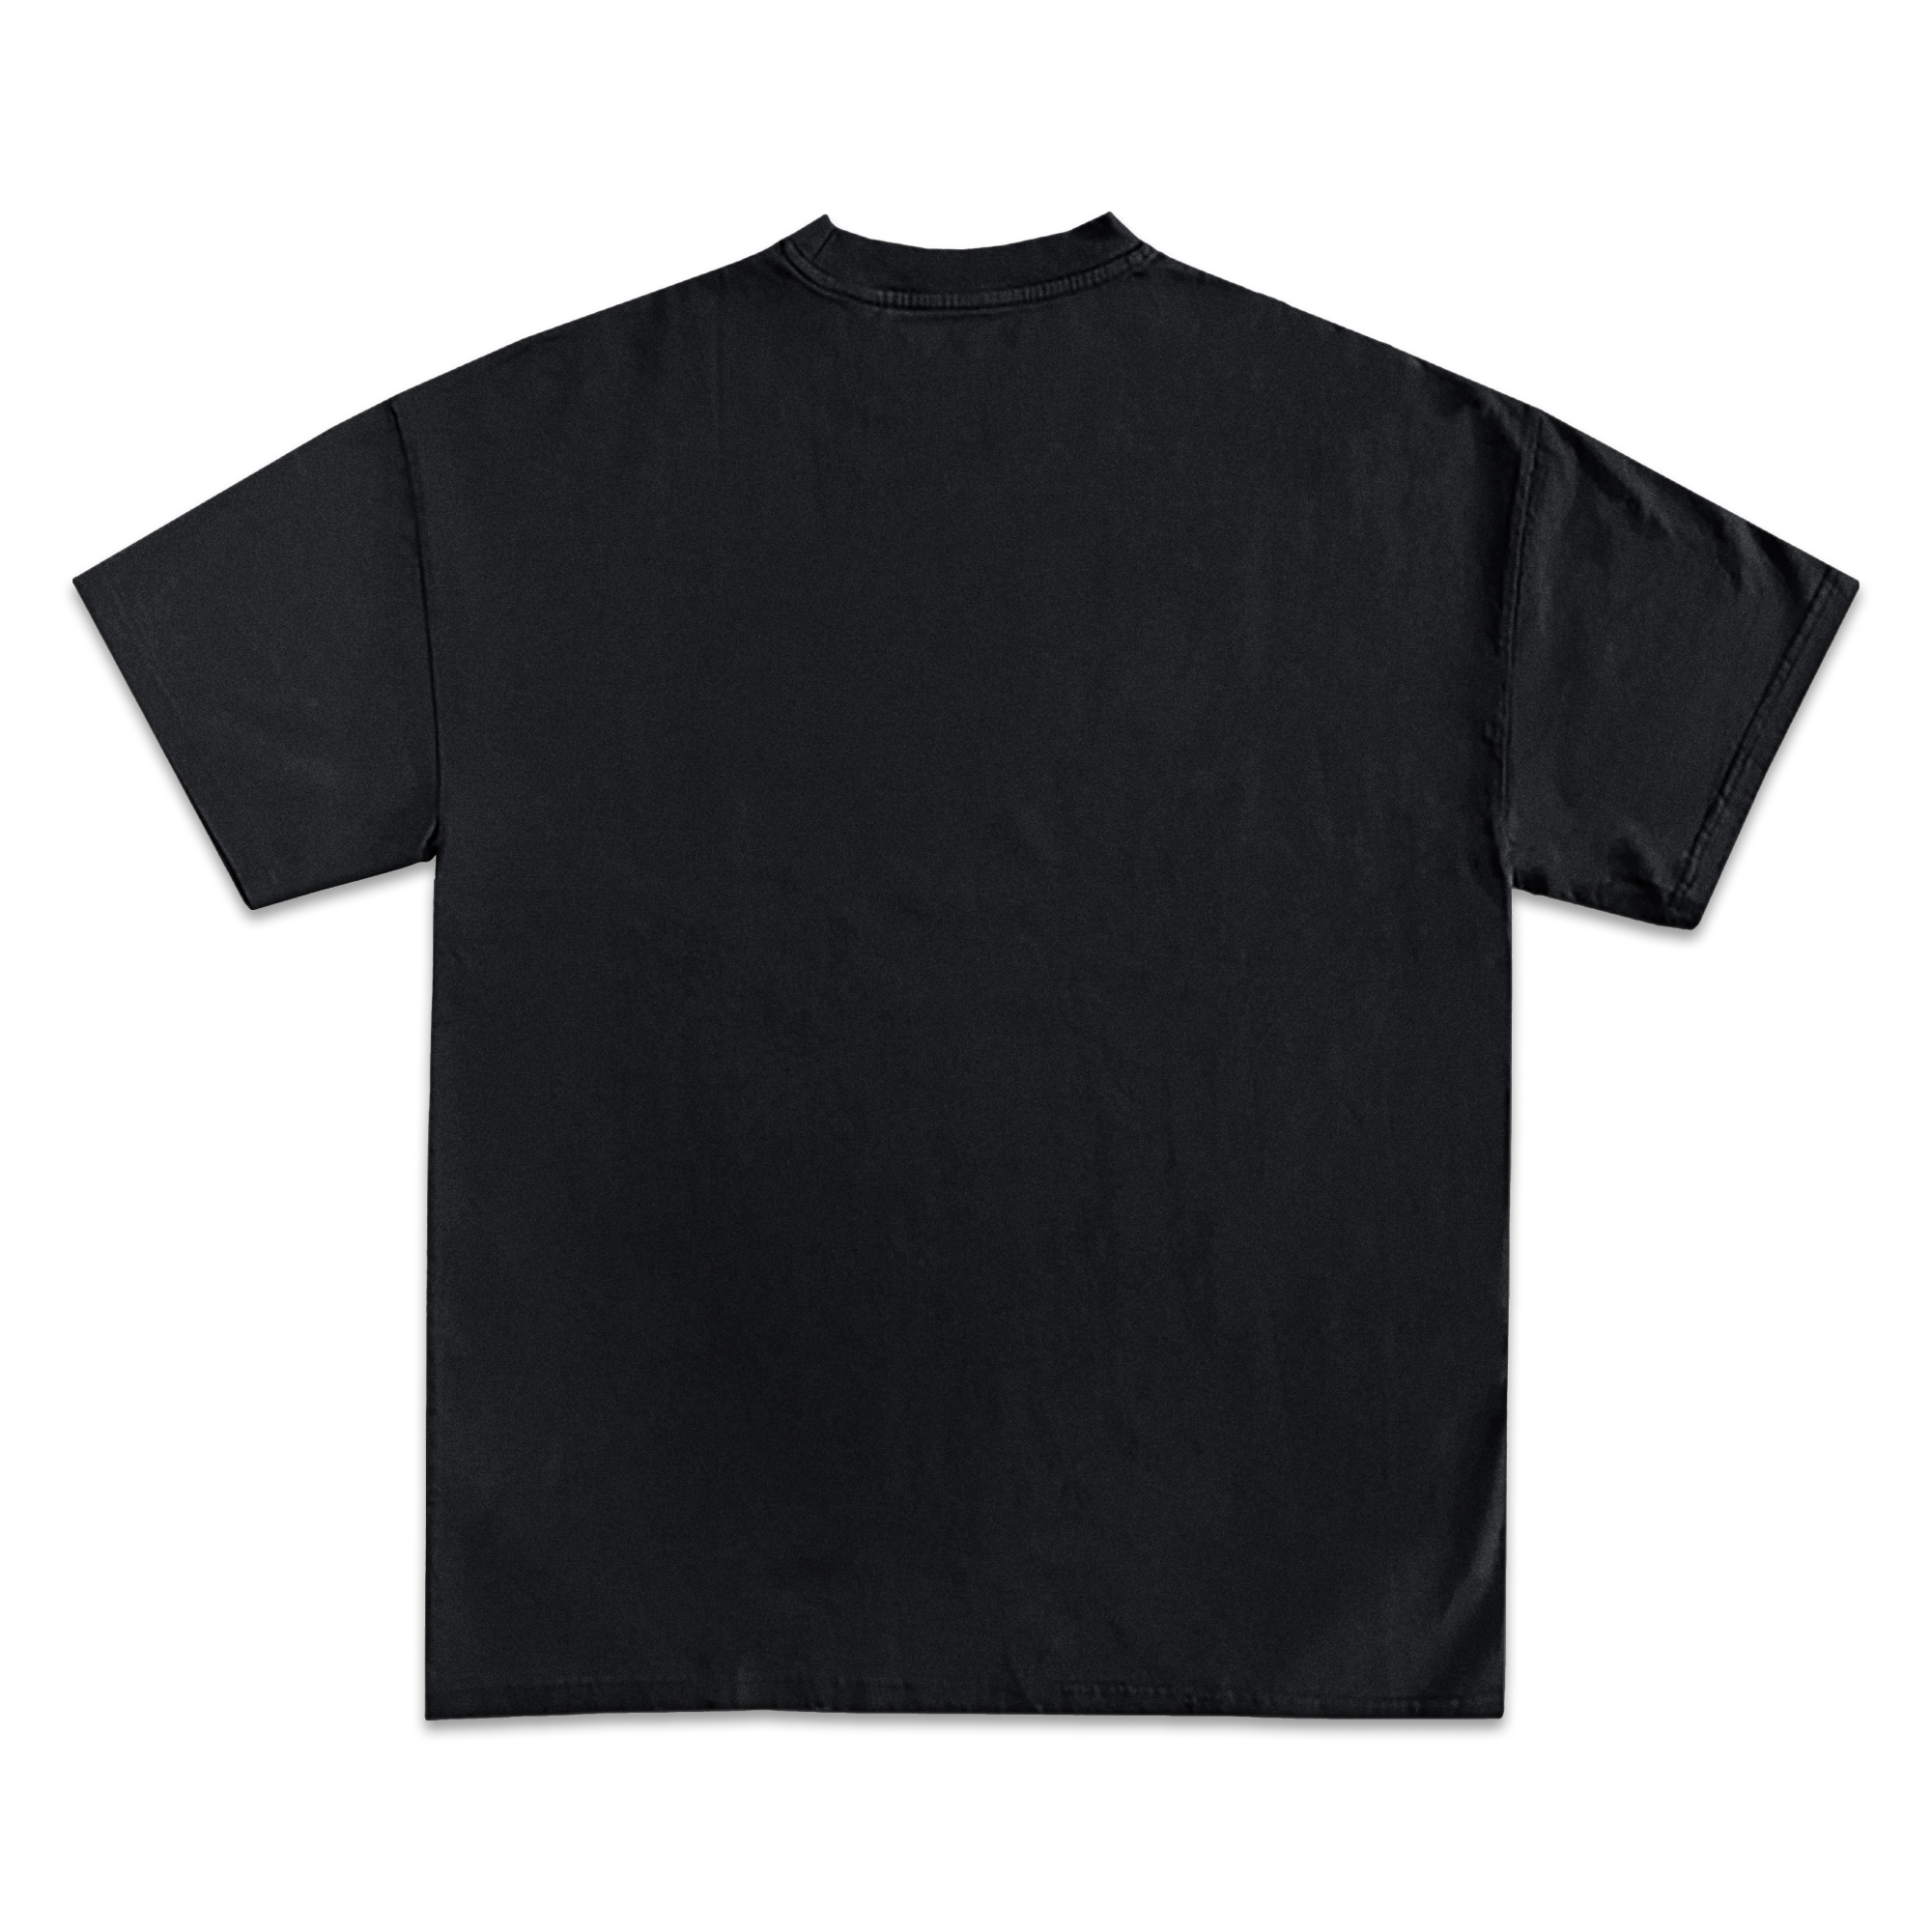 Juvenile "G-Code" Graphic T-Shirt